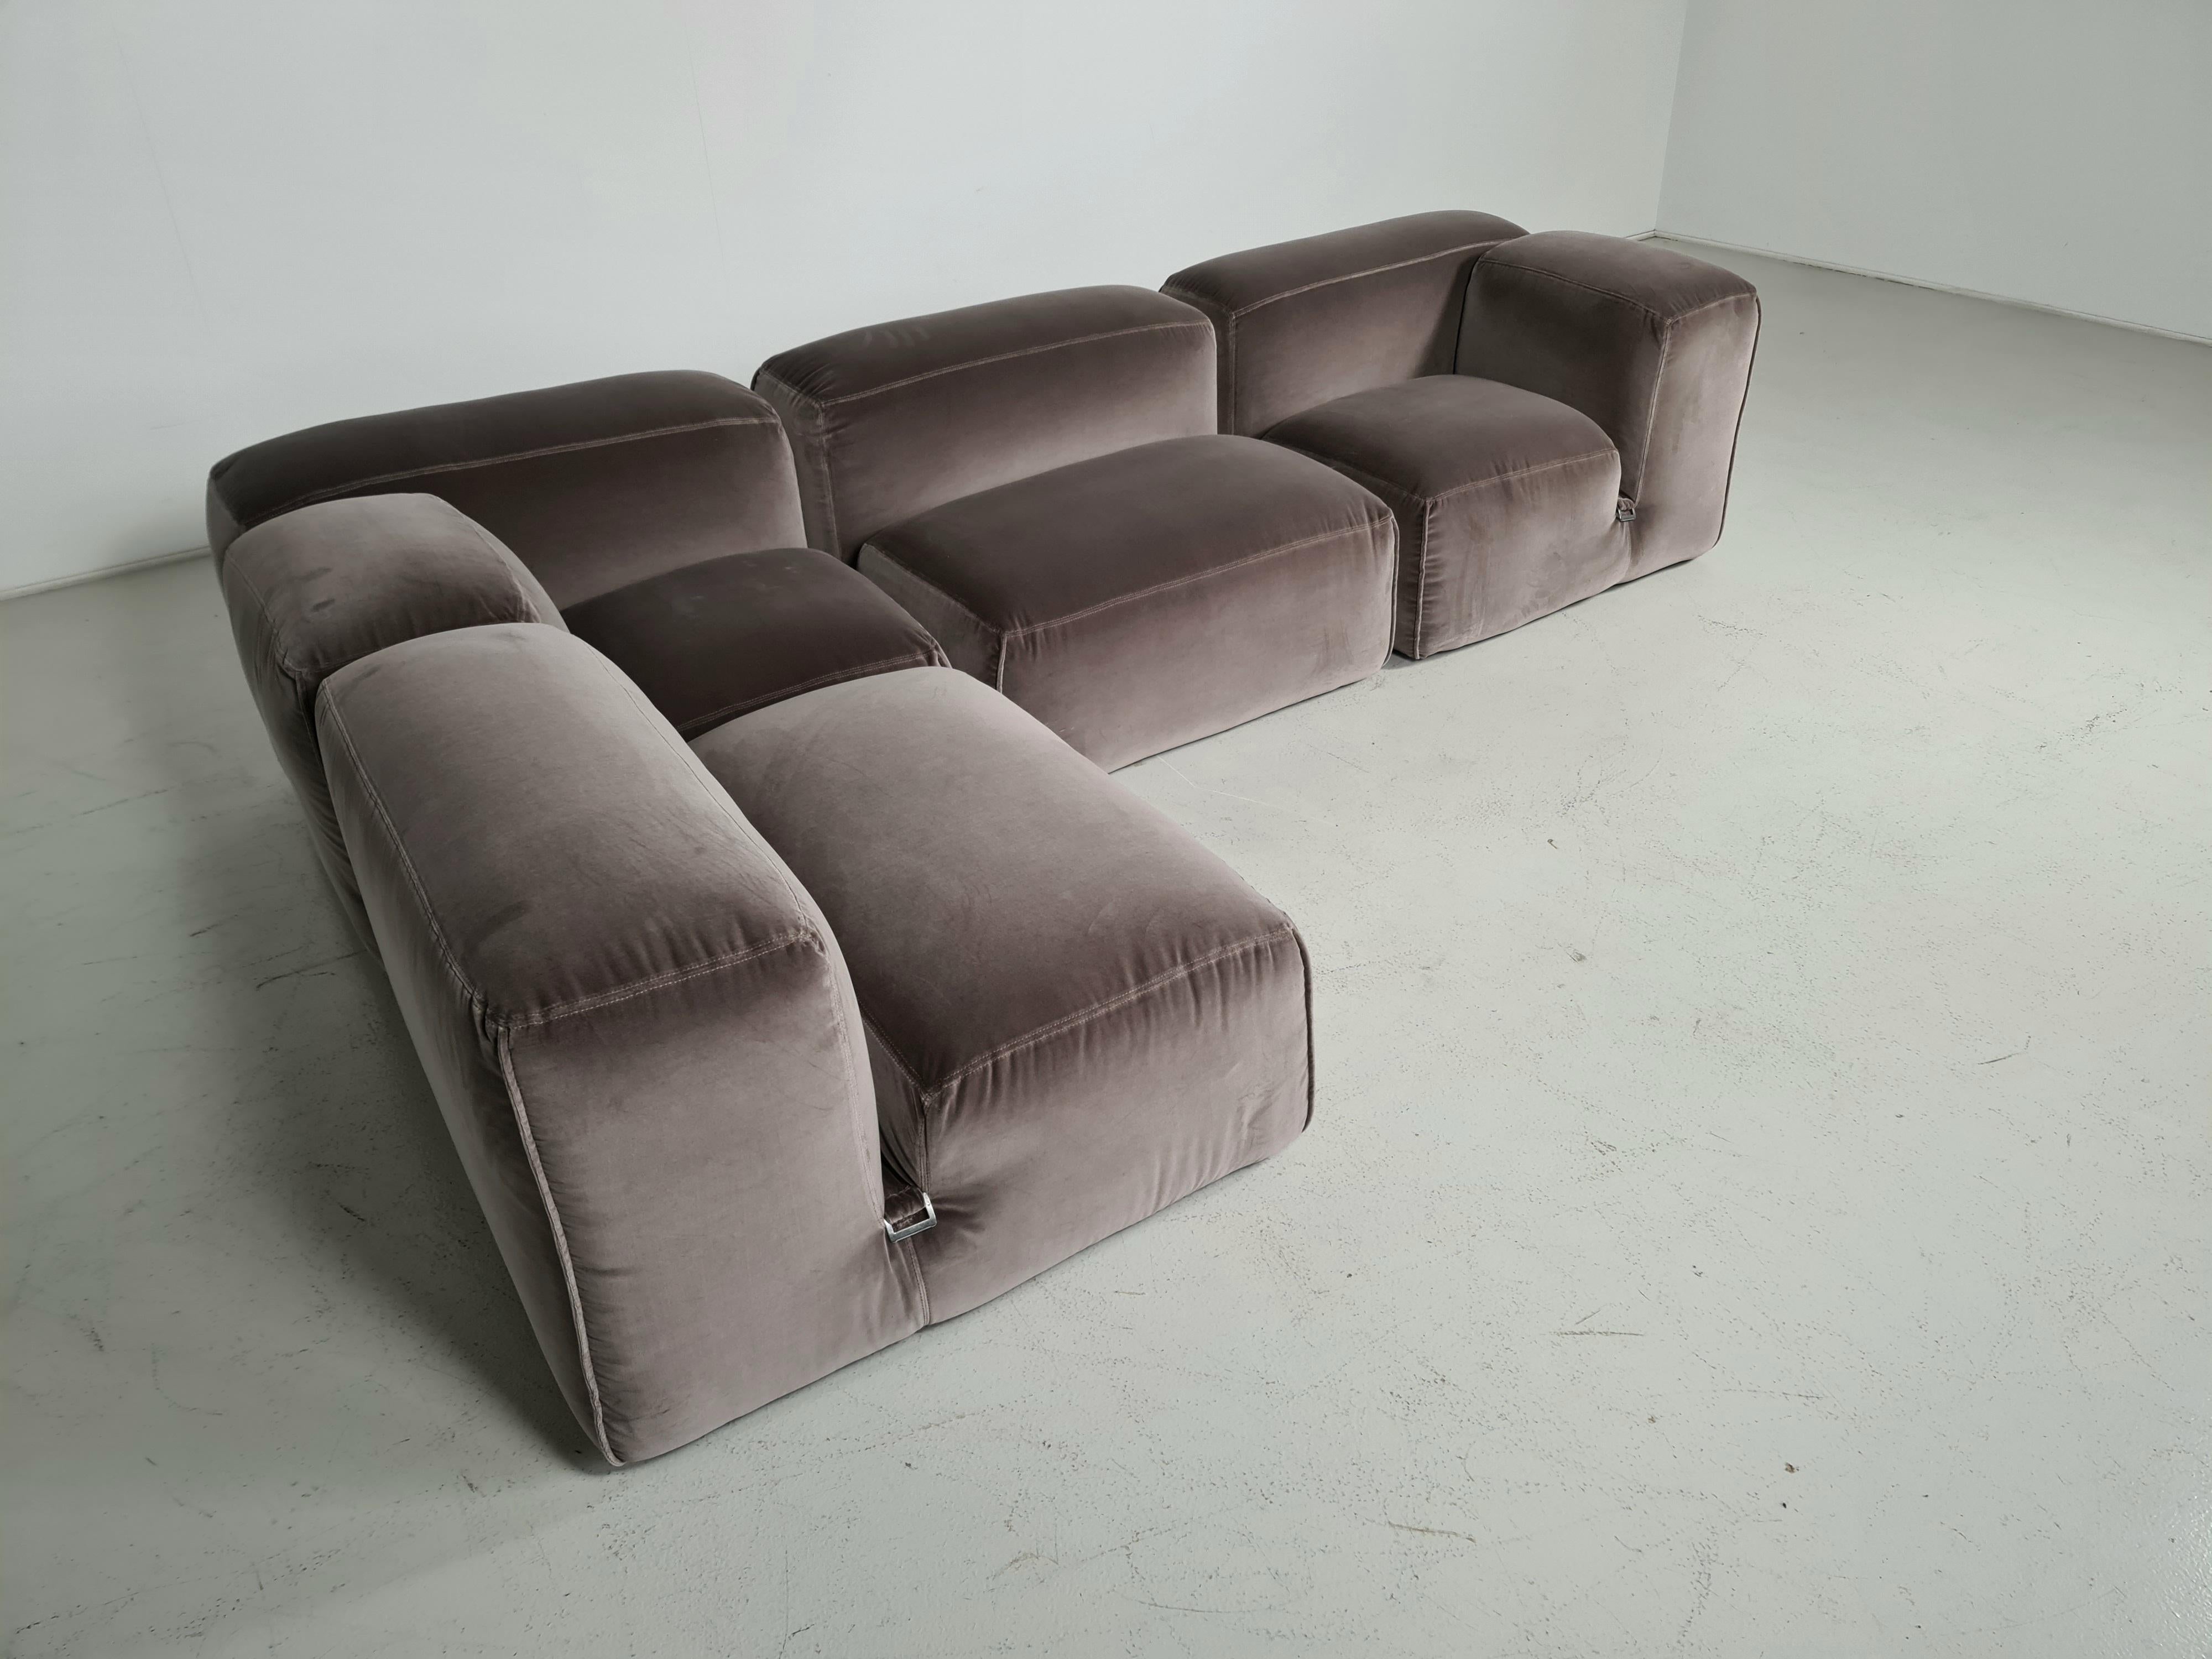 Mid-Century Modern Le Mura 4-Seater Sofa in beige/grey velvet by Mario Bellini for Cassina, 1970s For Sale